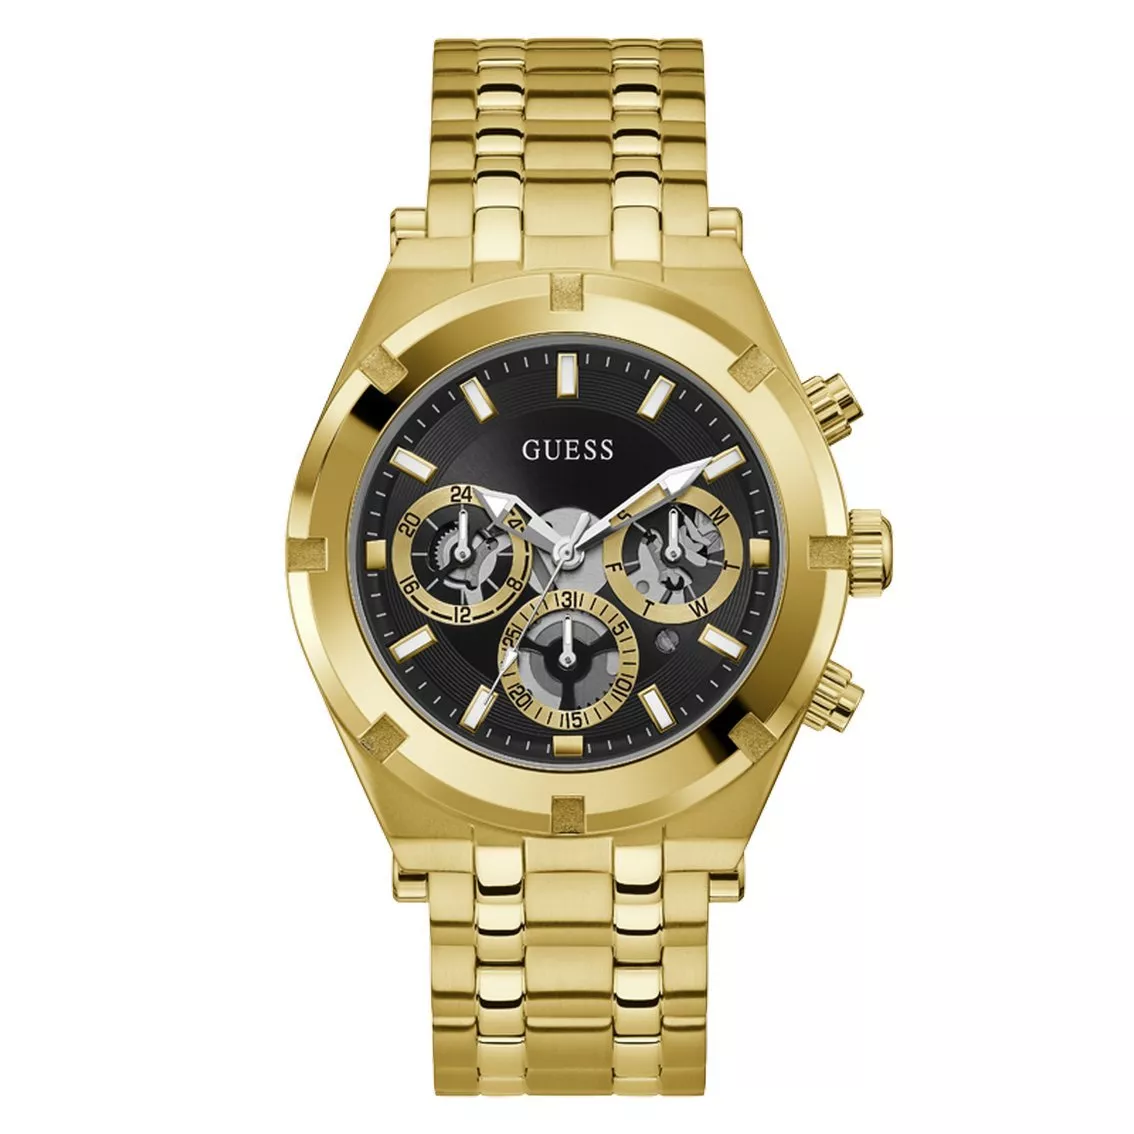 GUESS GW0260G2 Horloge Continetntal chrono staal goudkleurig-zwart 44 mm